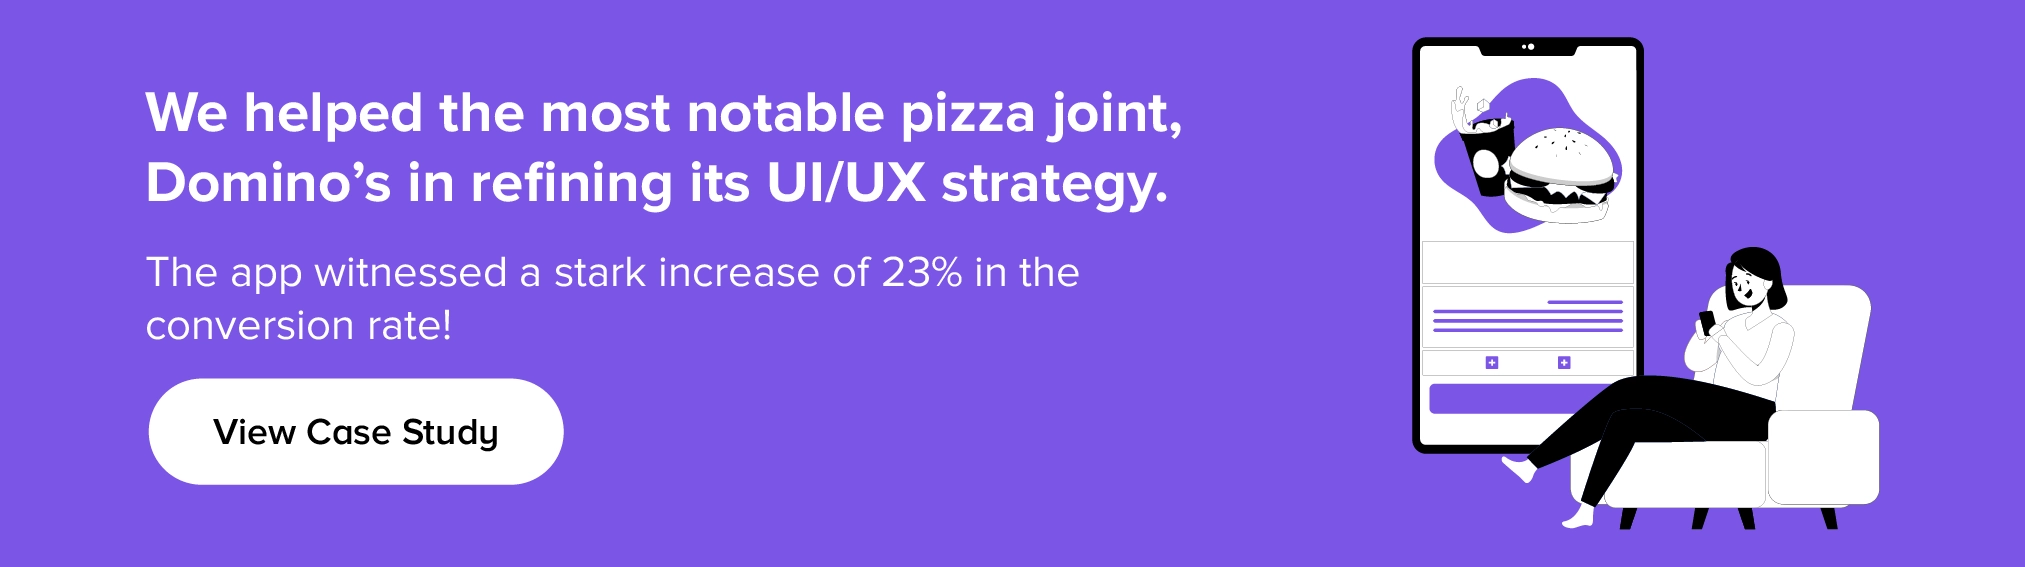 UI/UX 전략을 개선하기 위해 Domino's와 협력한 방법.